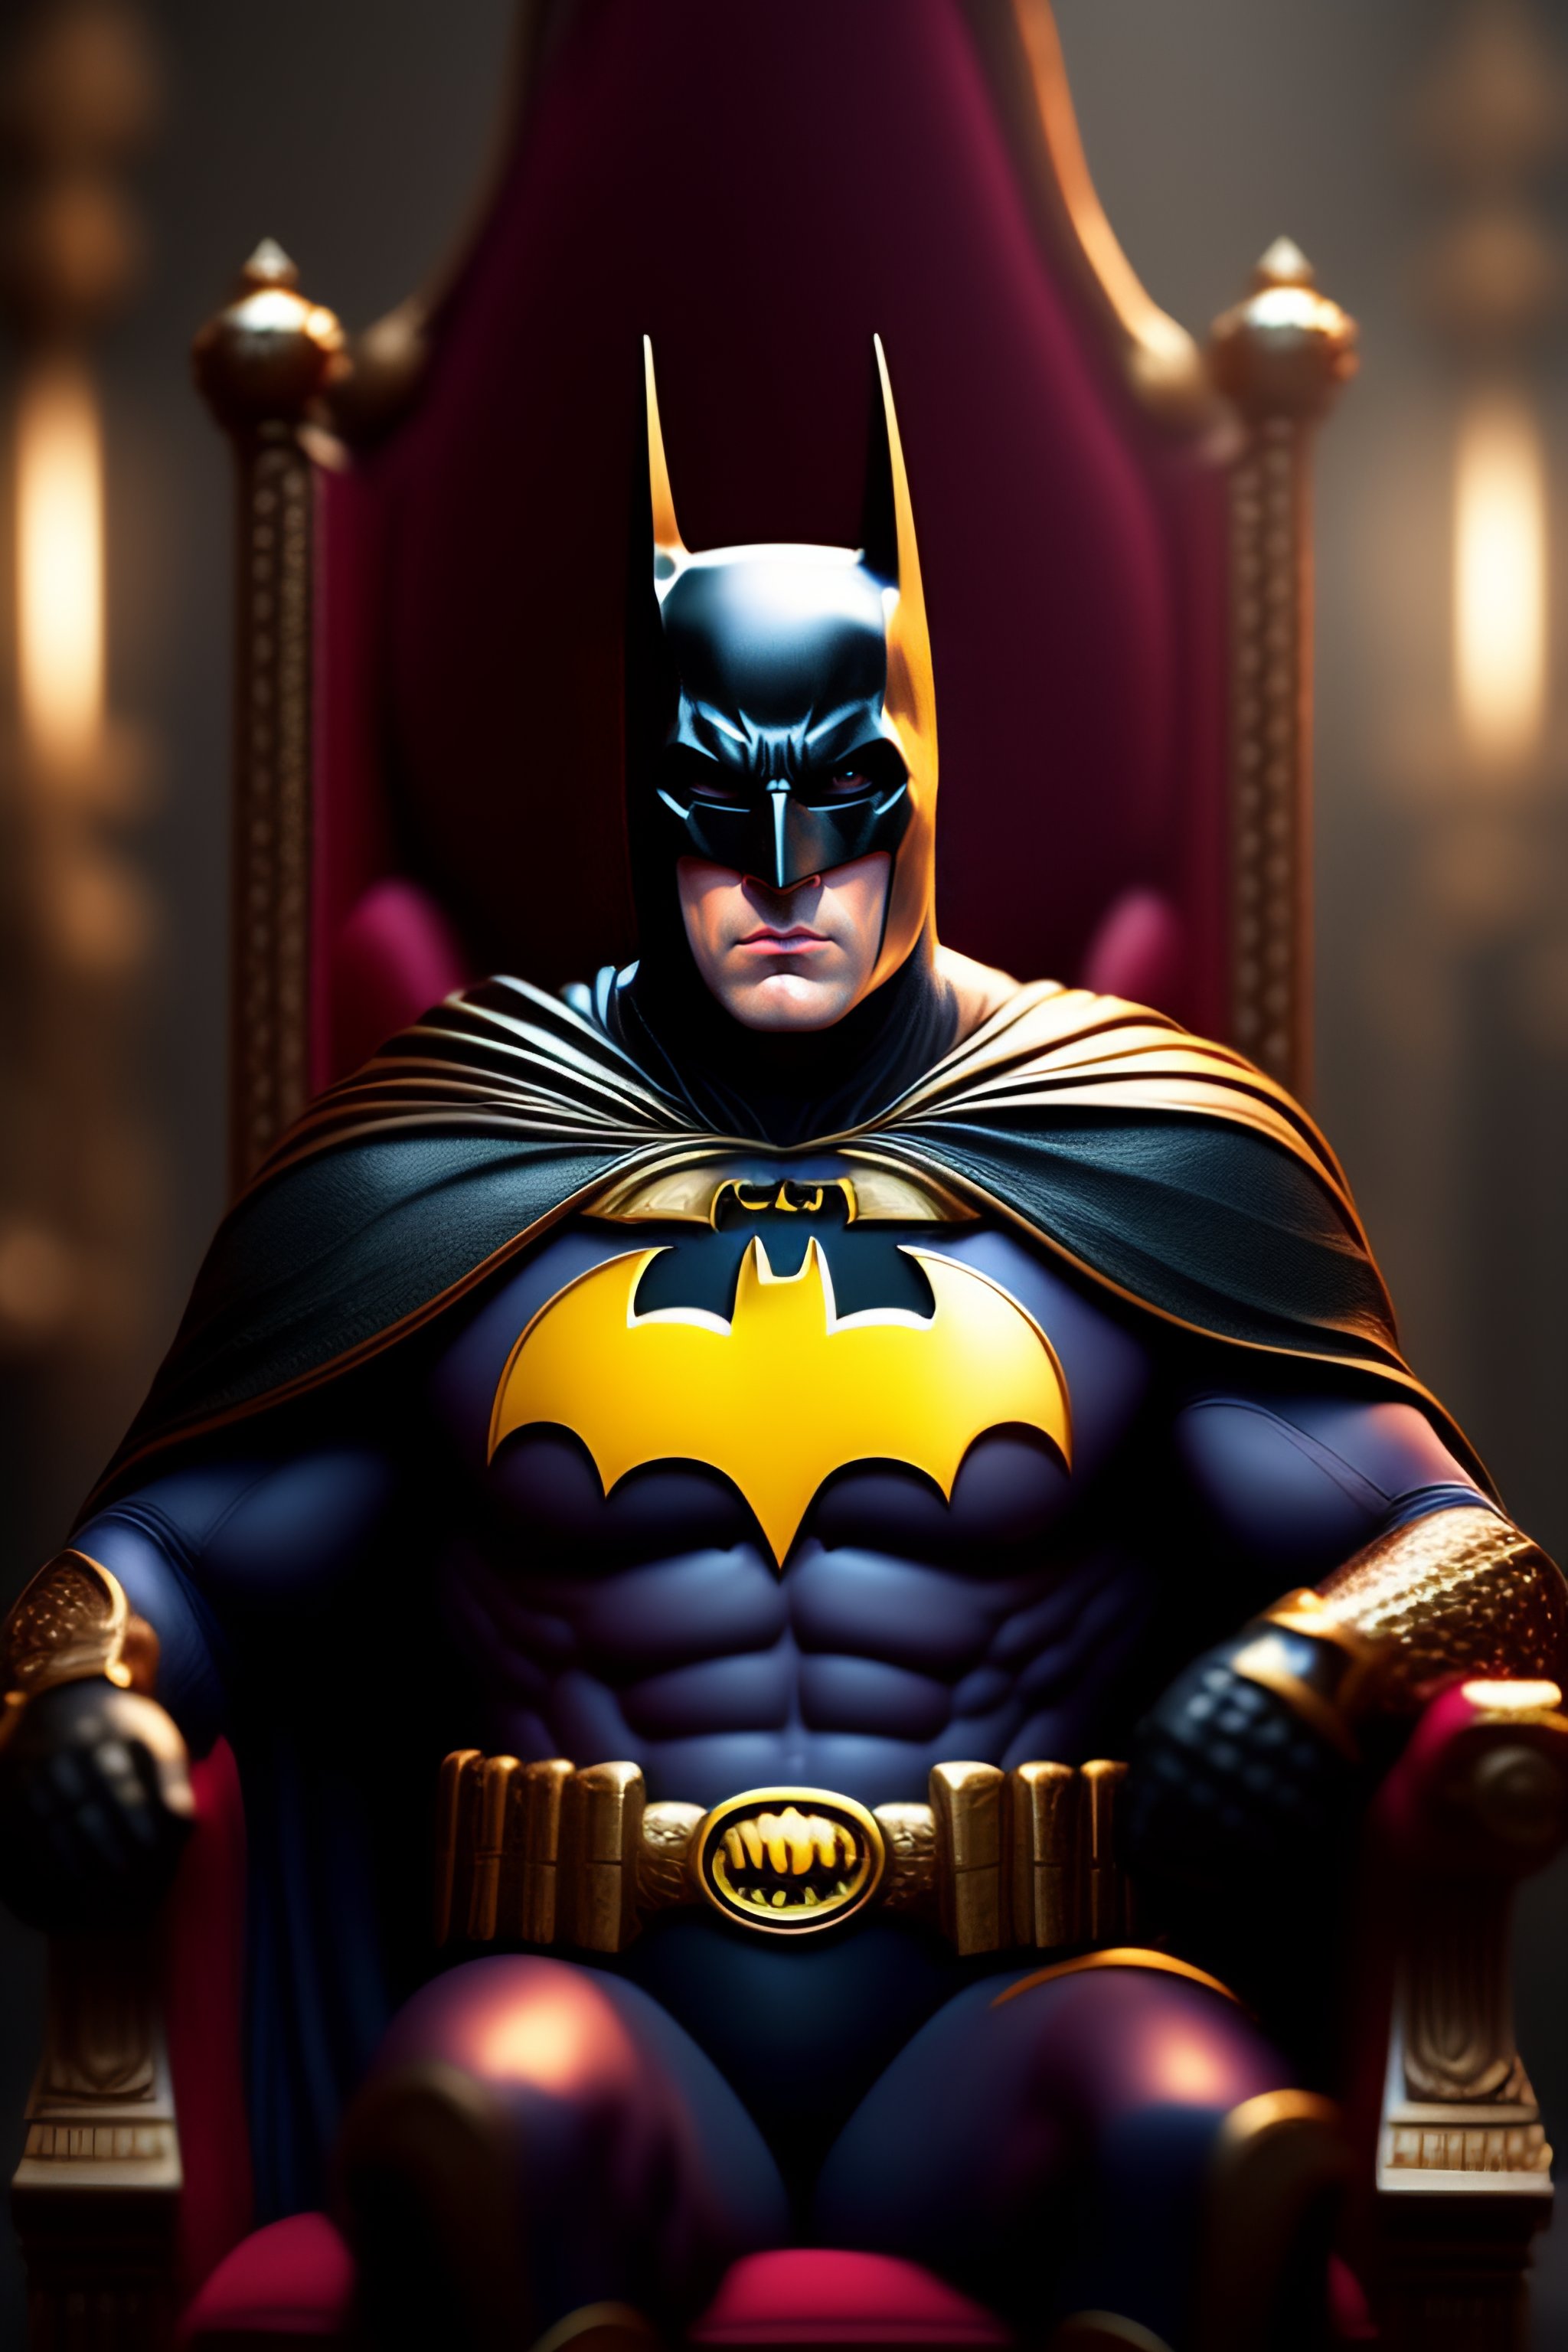 Lexica - A portrait of batman as a king sitting on a throne, cute